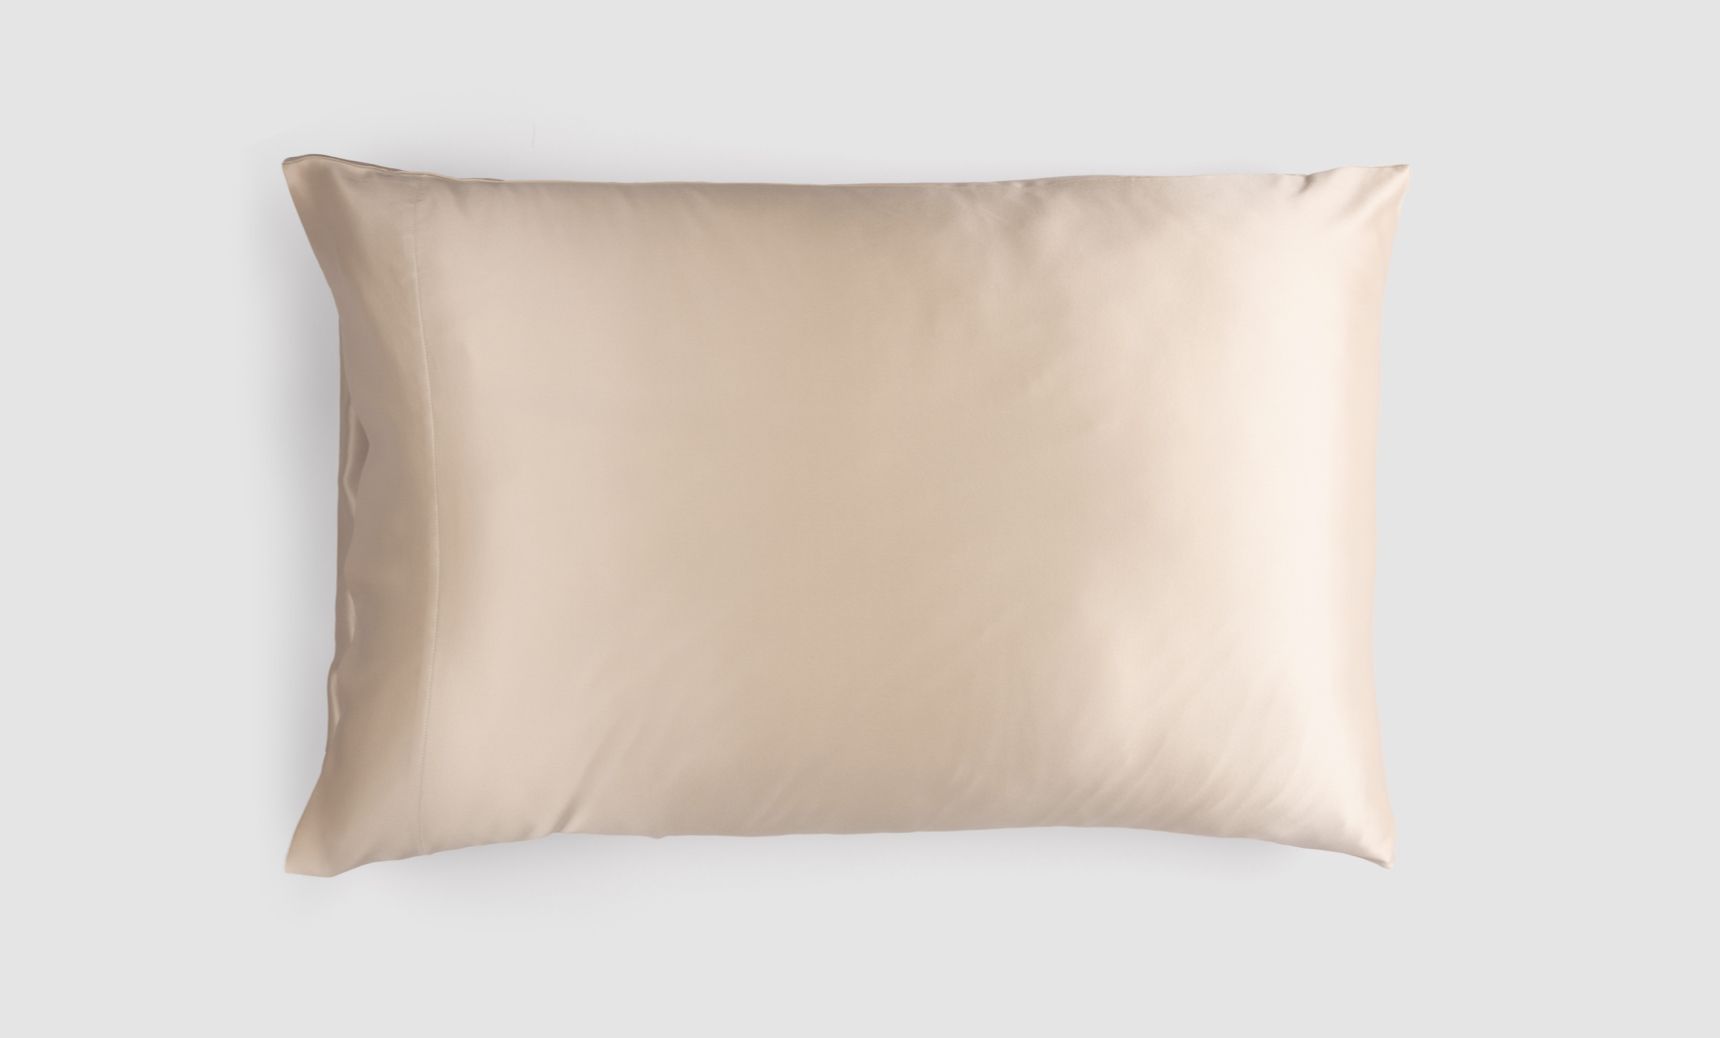 The Endy Silk Pillowcase in Moonlight Beige colourway